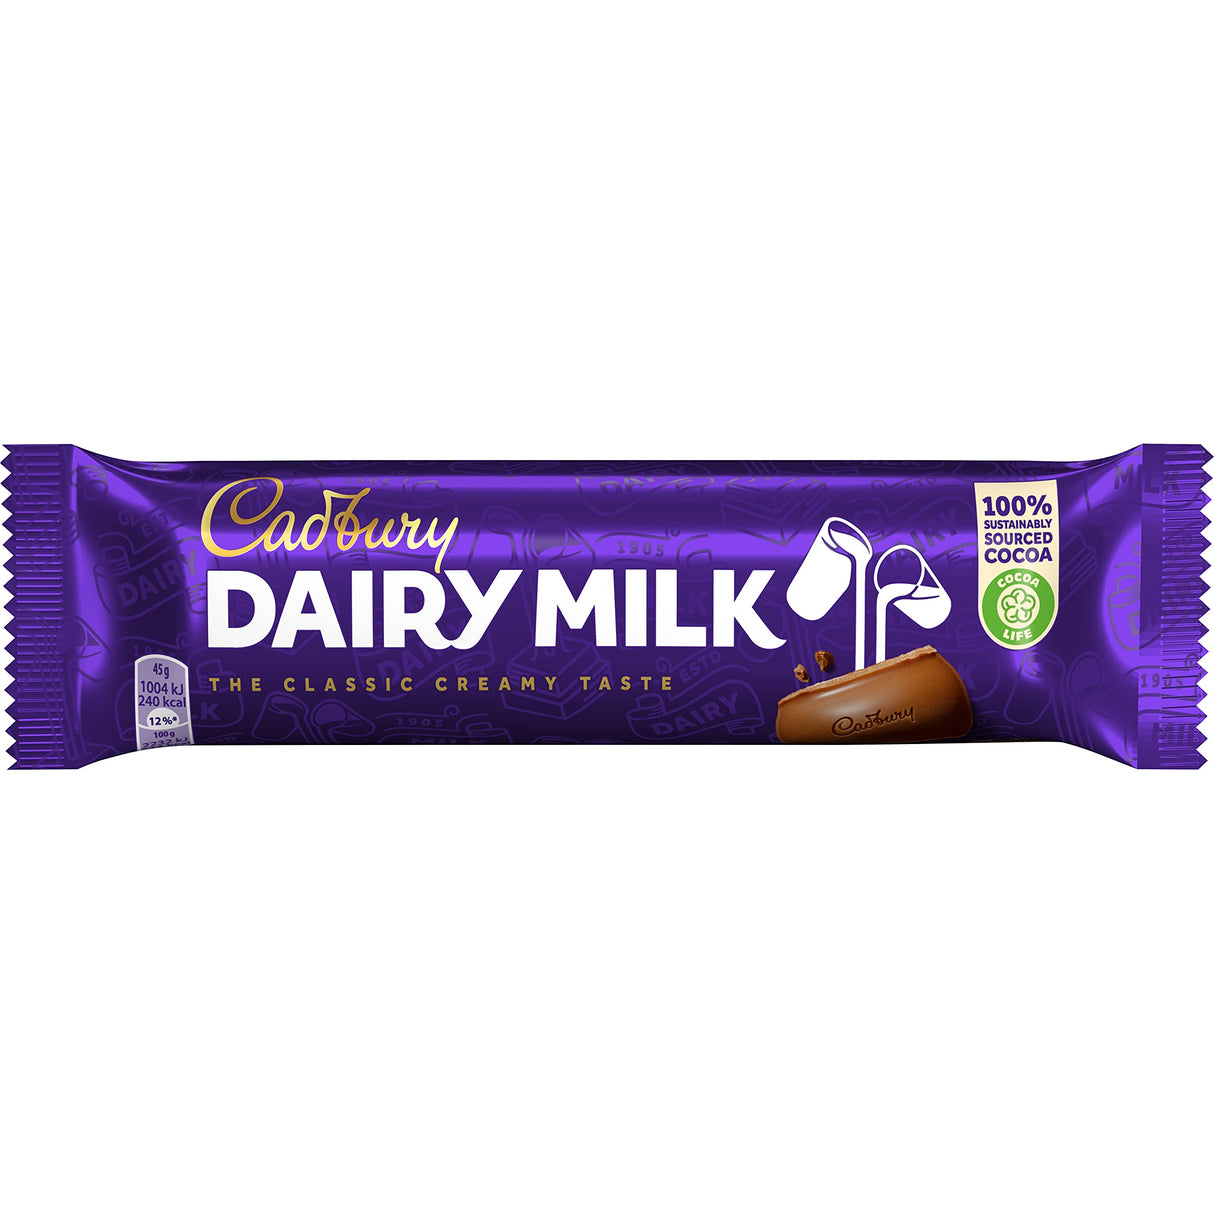 Cadbury Dairy Milk 45g x 1 units